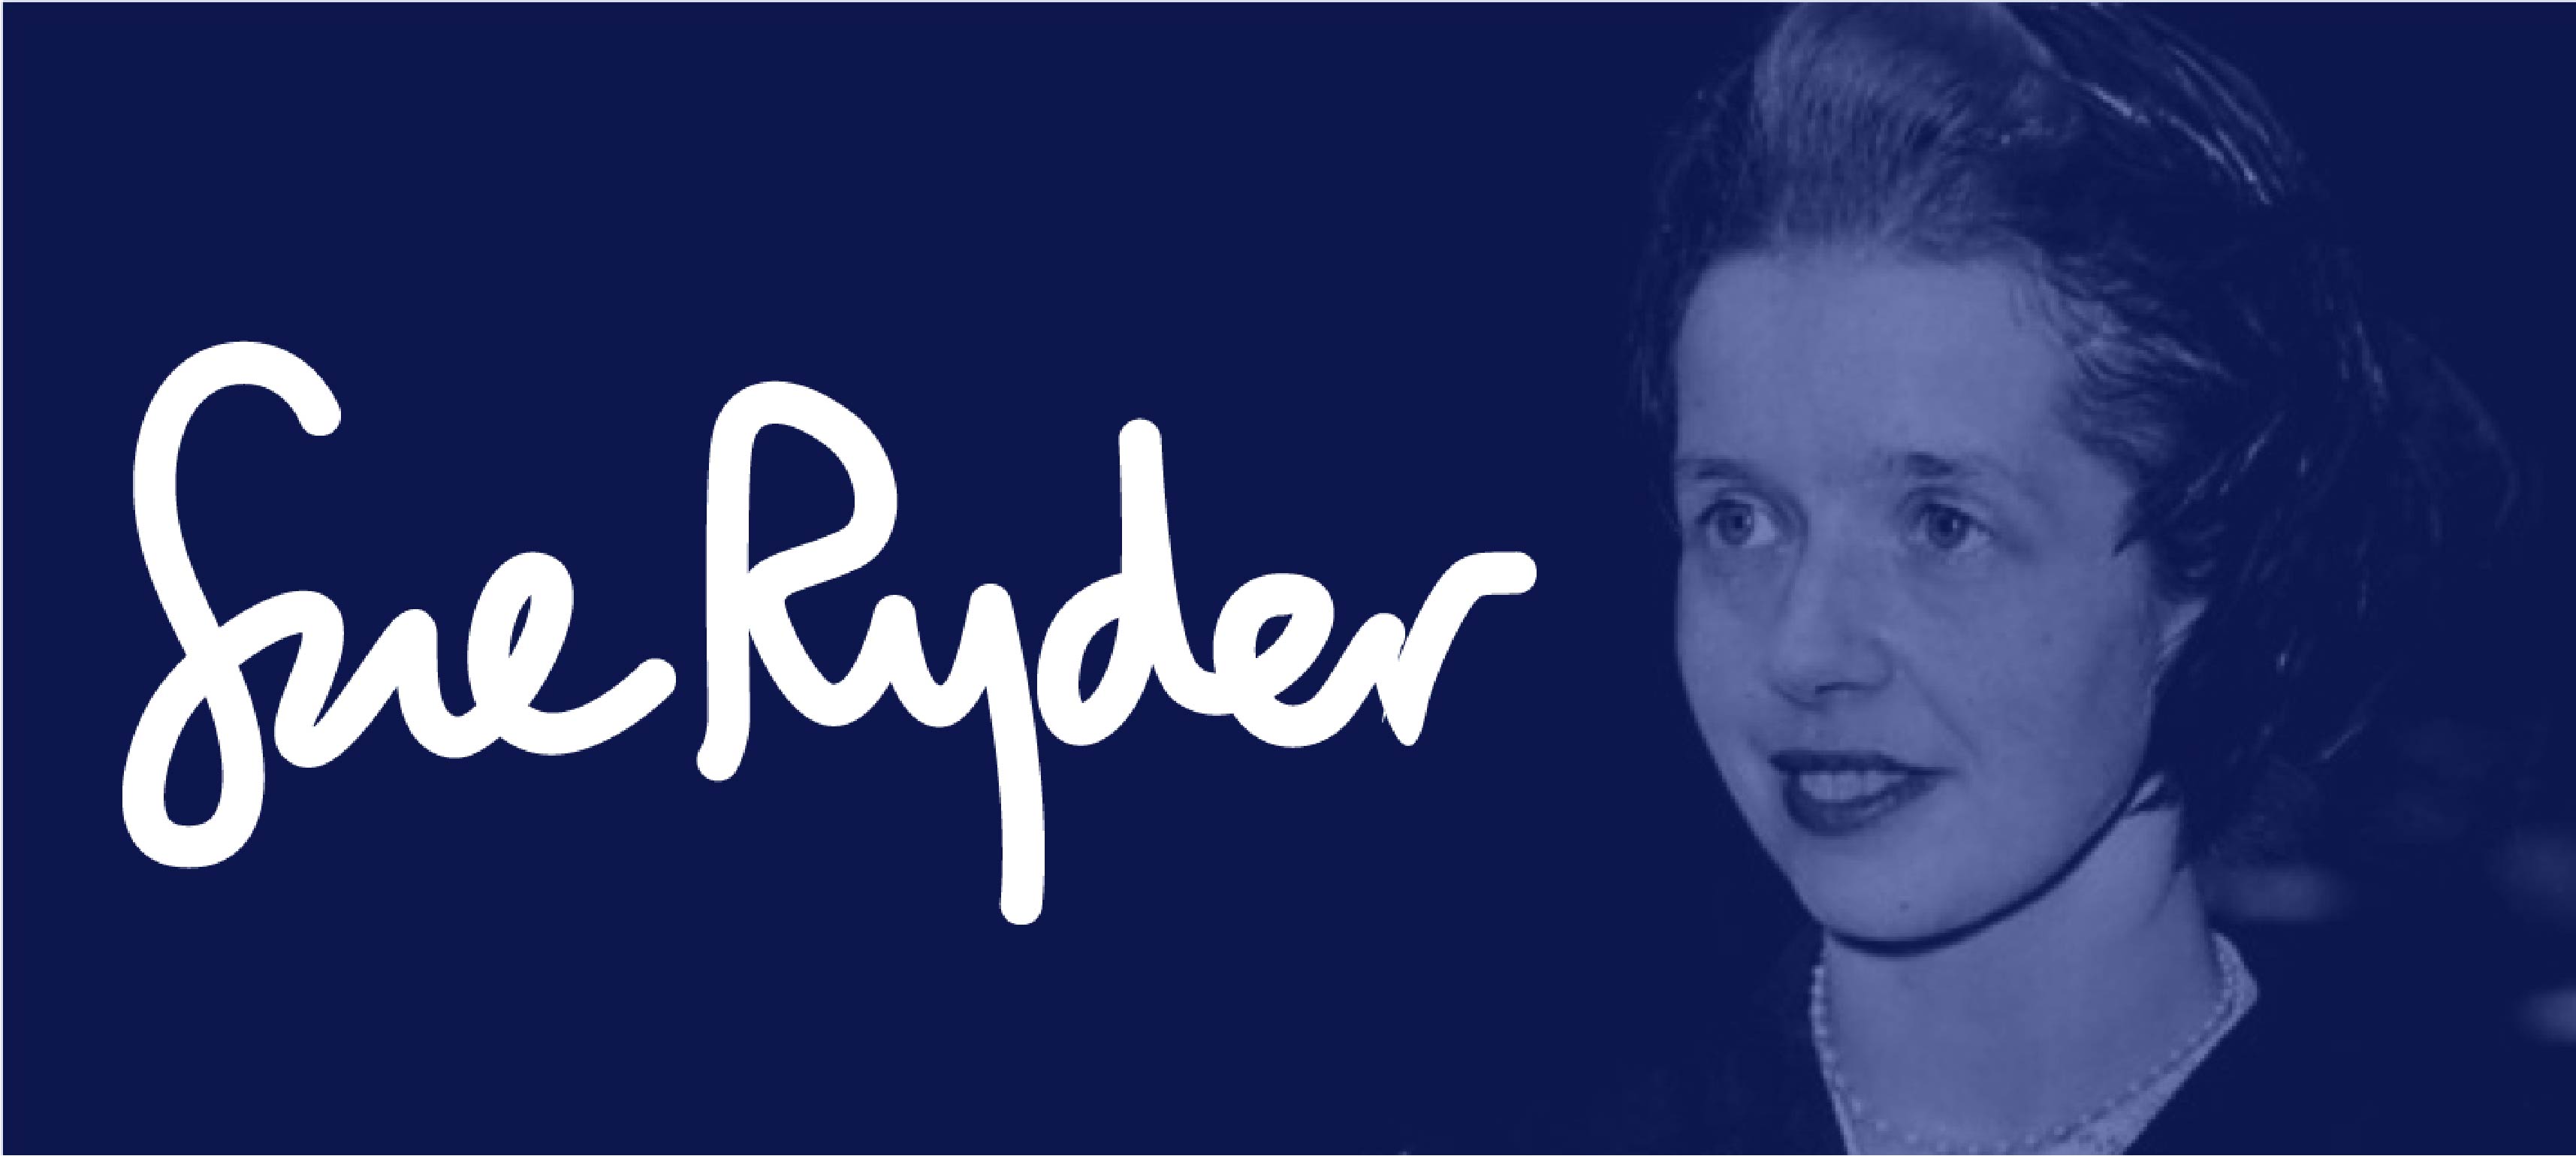 Sue Ryder charity logo